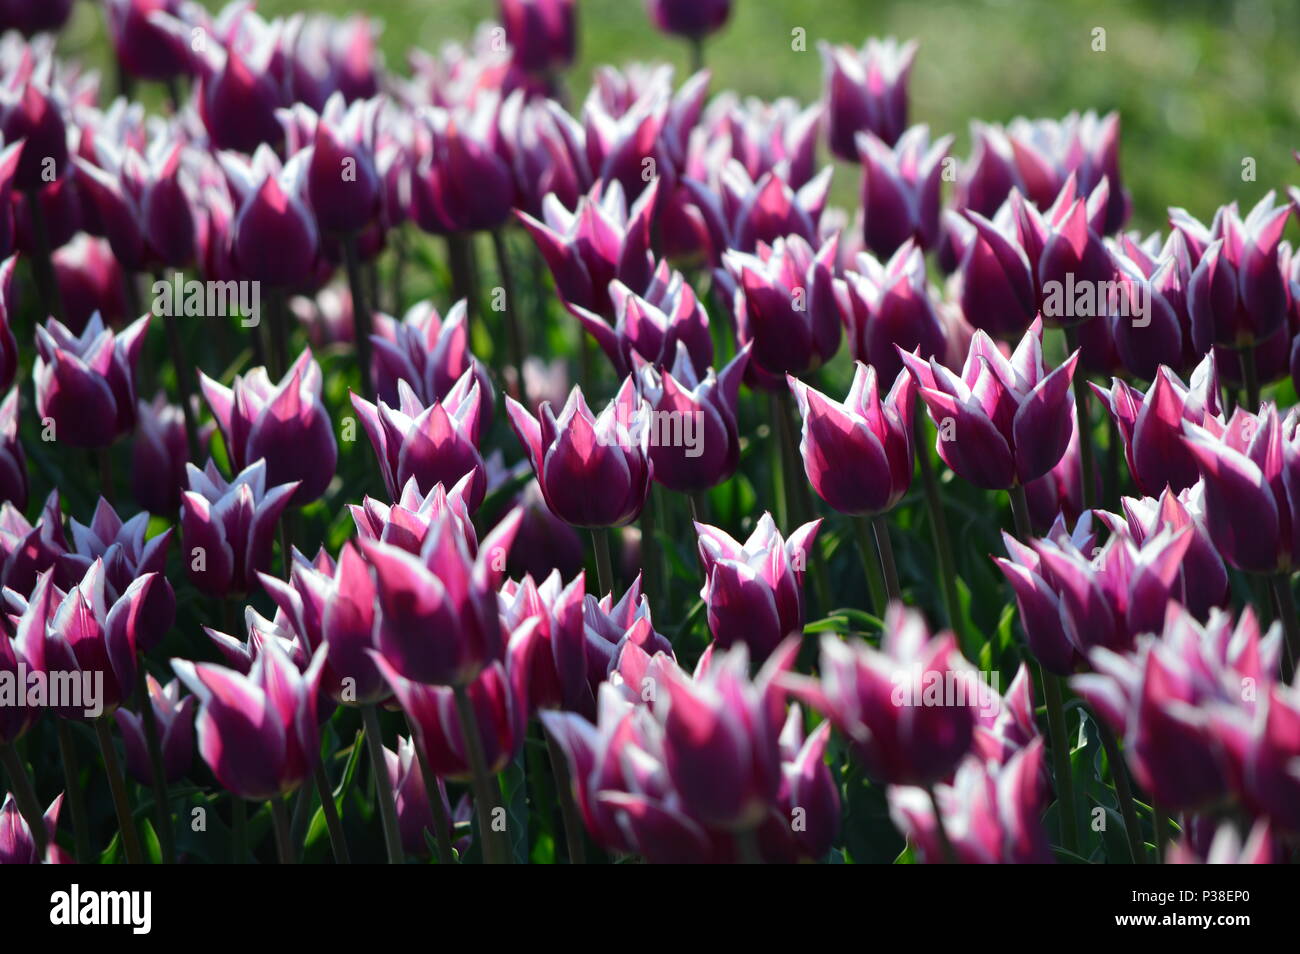 Pandion Tulips At Veldheer Tulip Garden In Holland Stock Photo